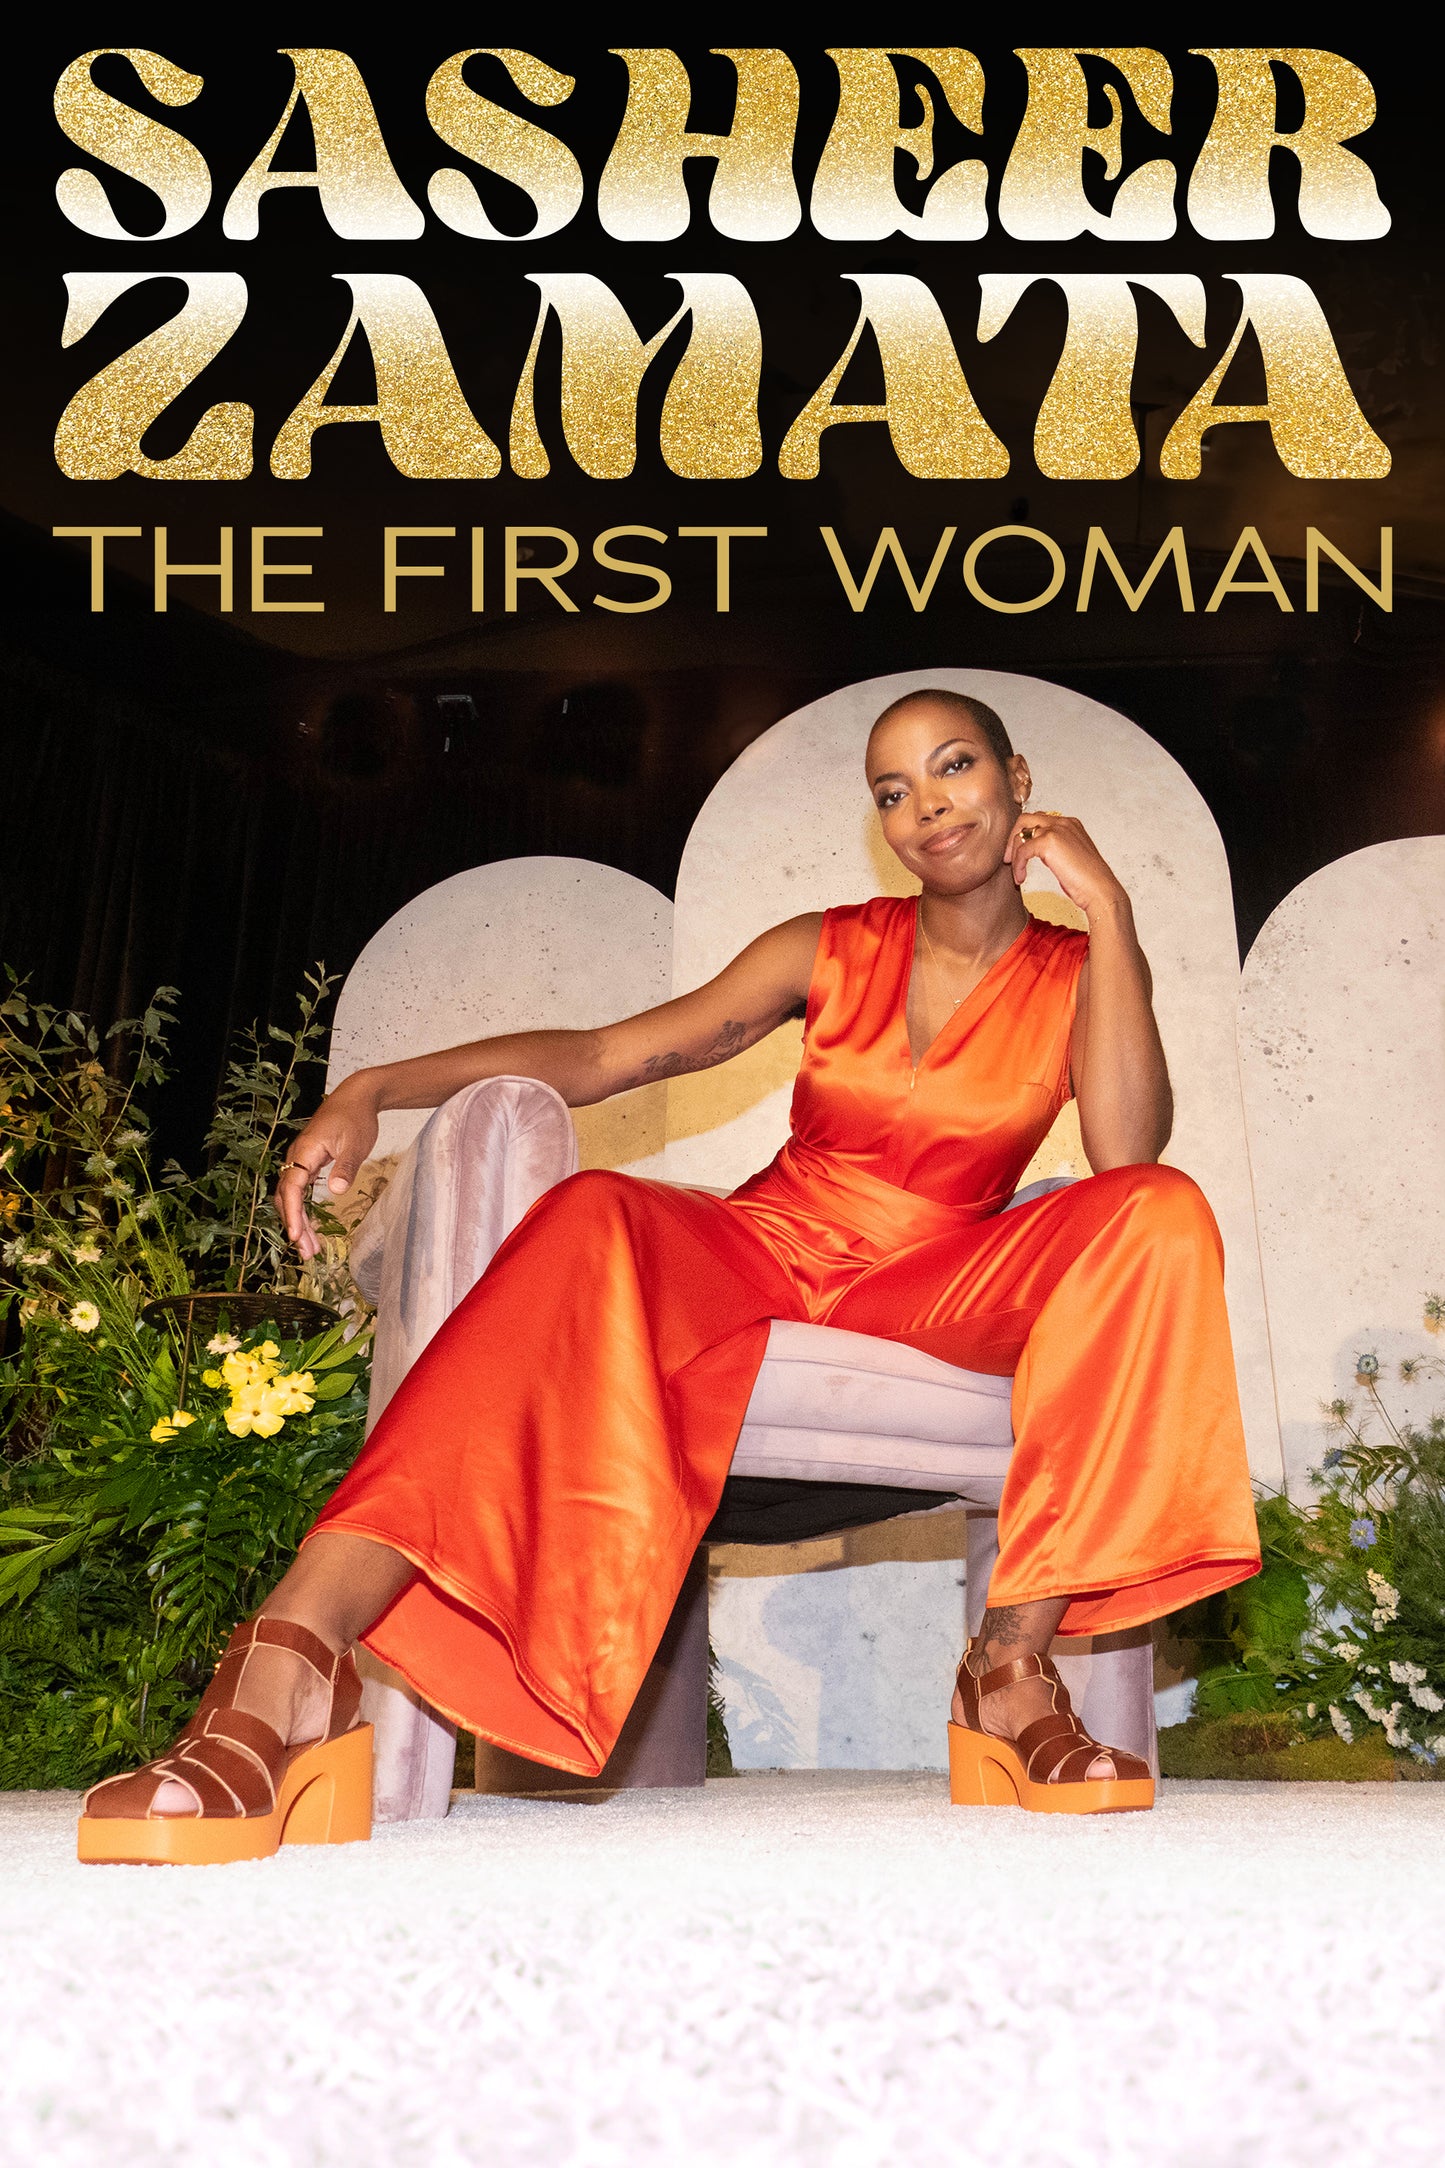 Sasheer Zamata - The First Woman